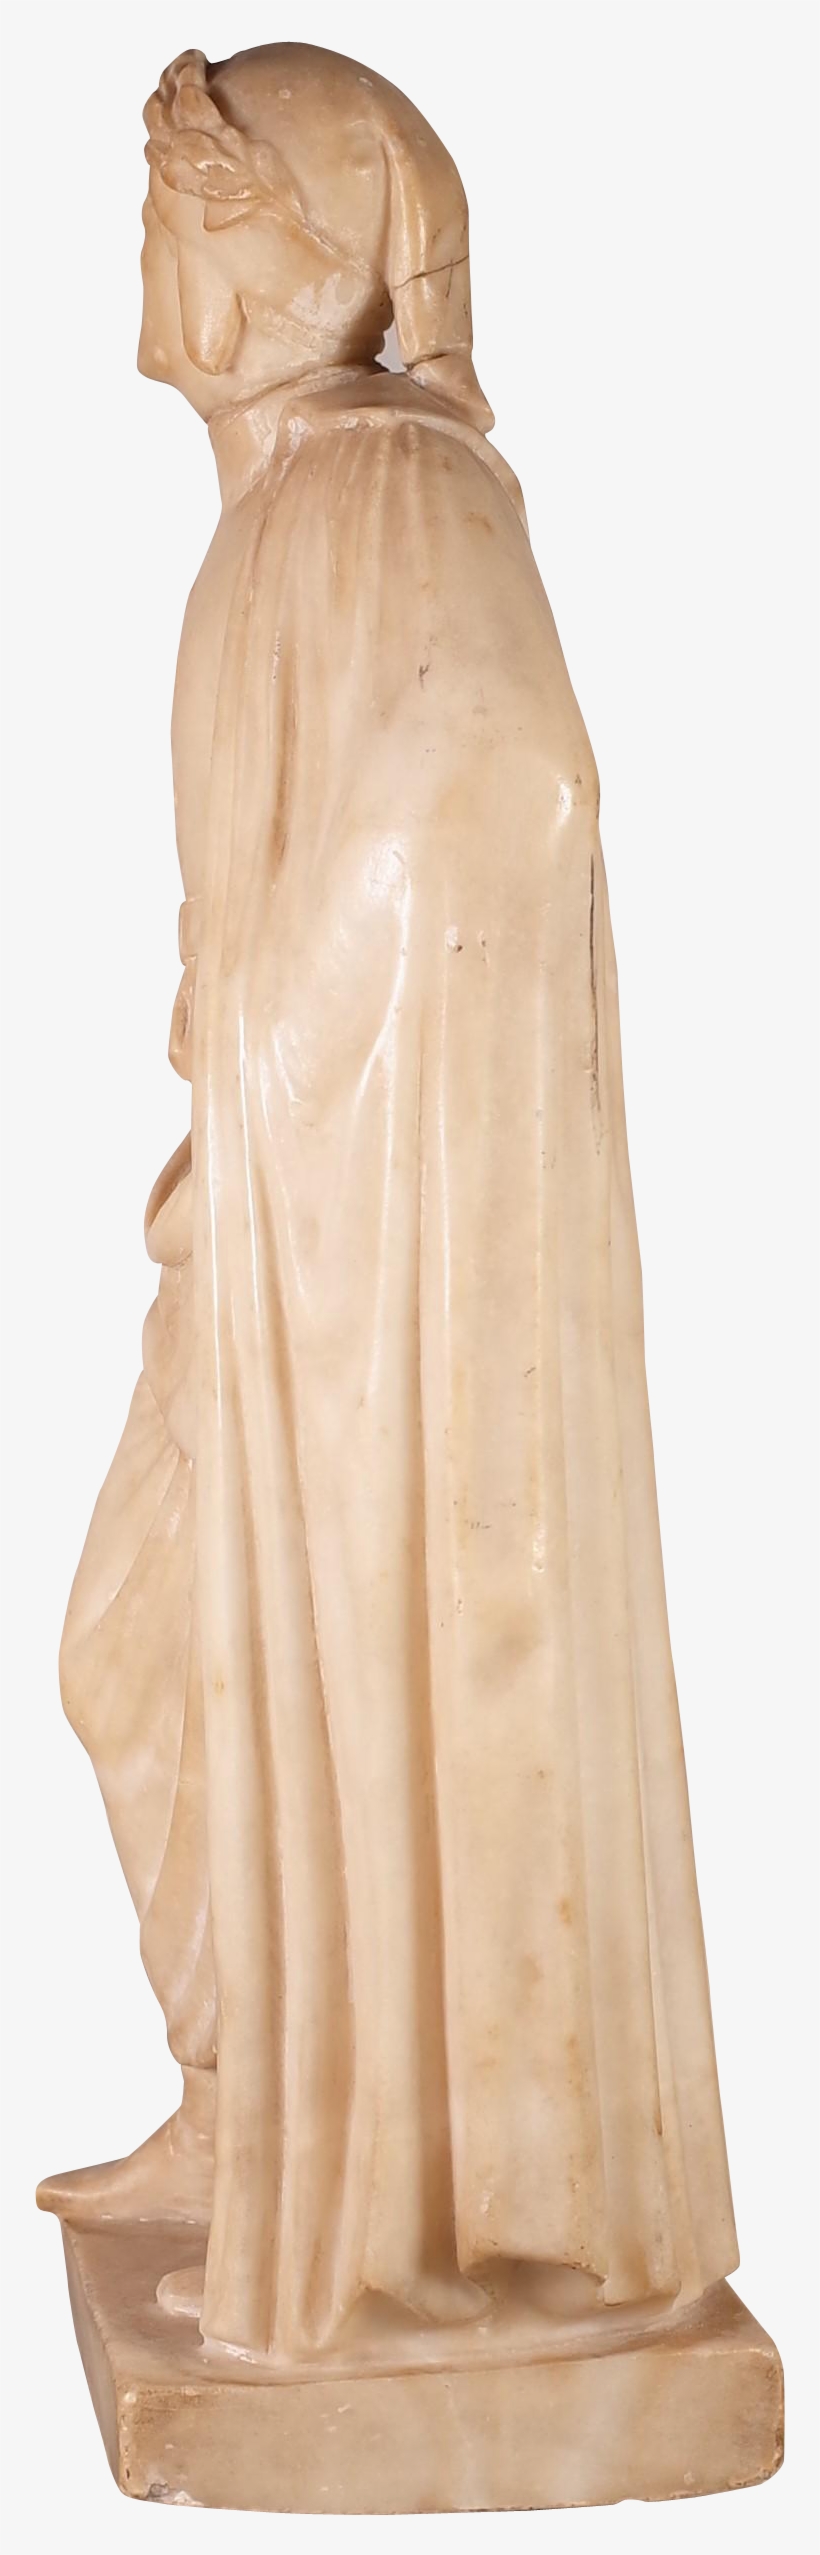 Alabaster Model Of Classical Roman Figure In Cloak - Statue, transparent png #8196409